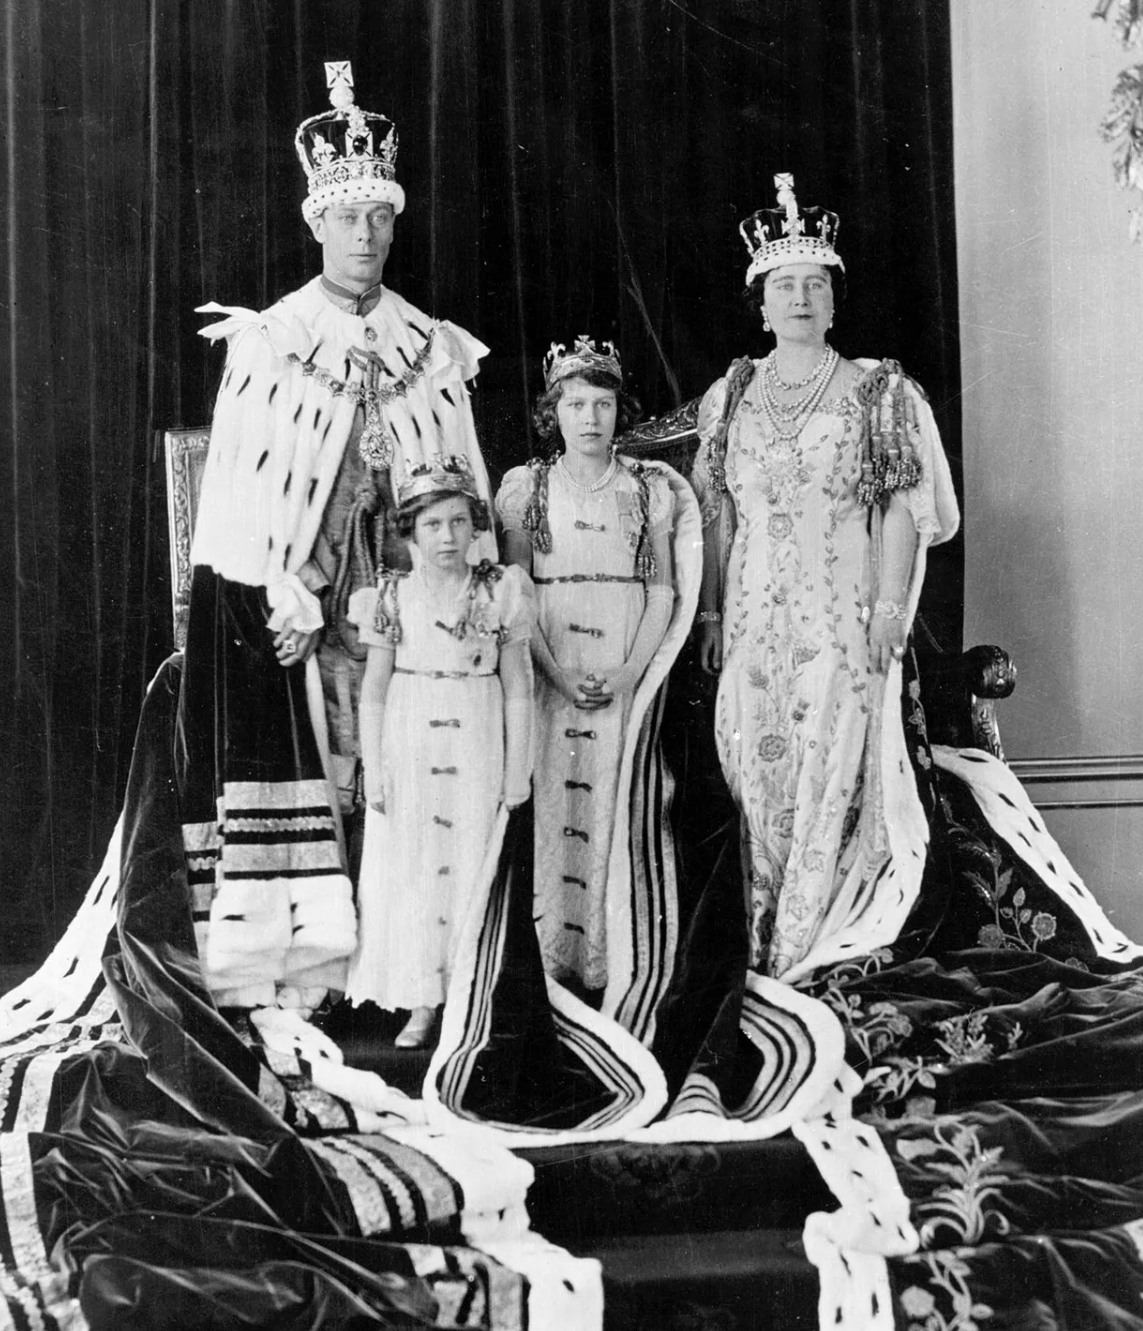 King George VI's Coronation Day, 1937